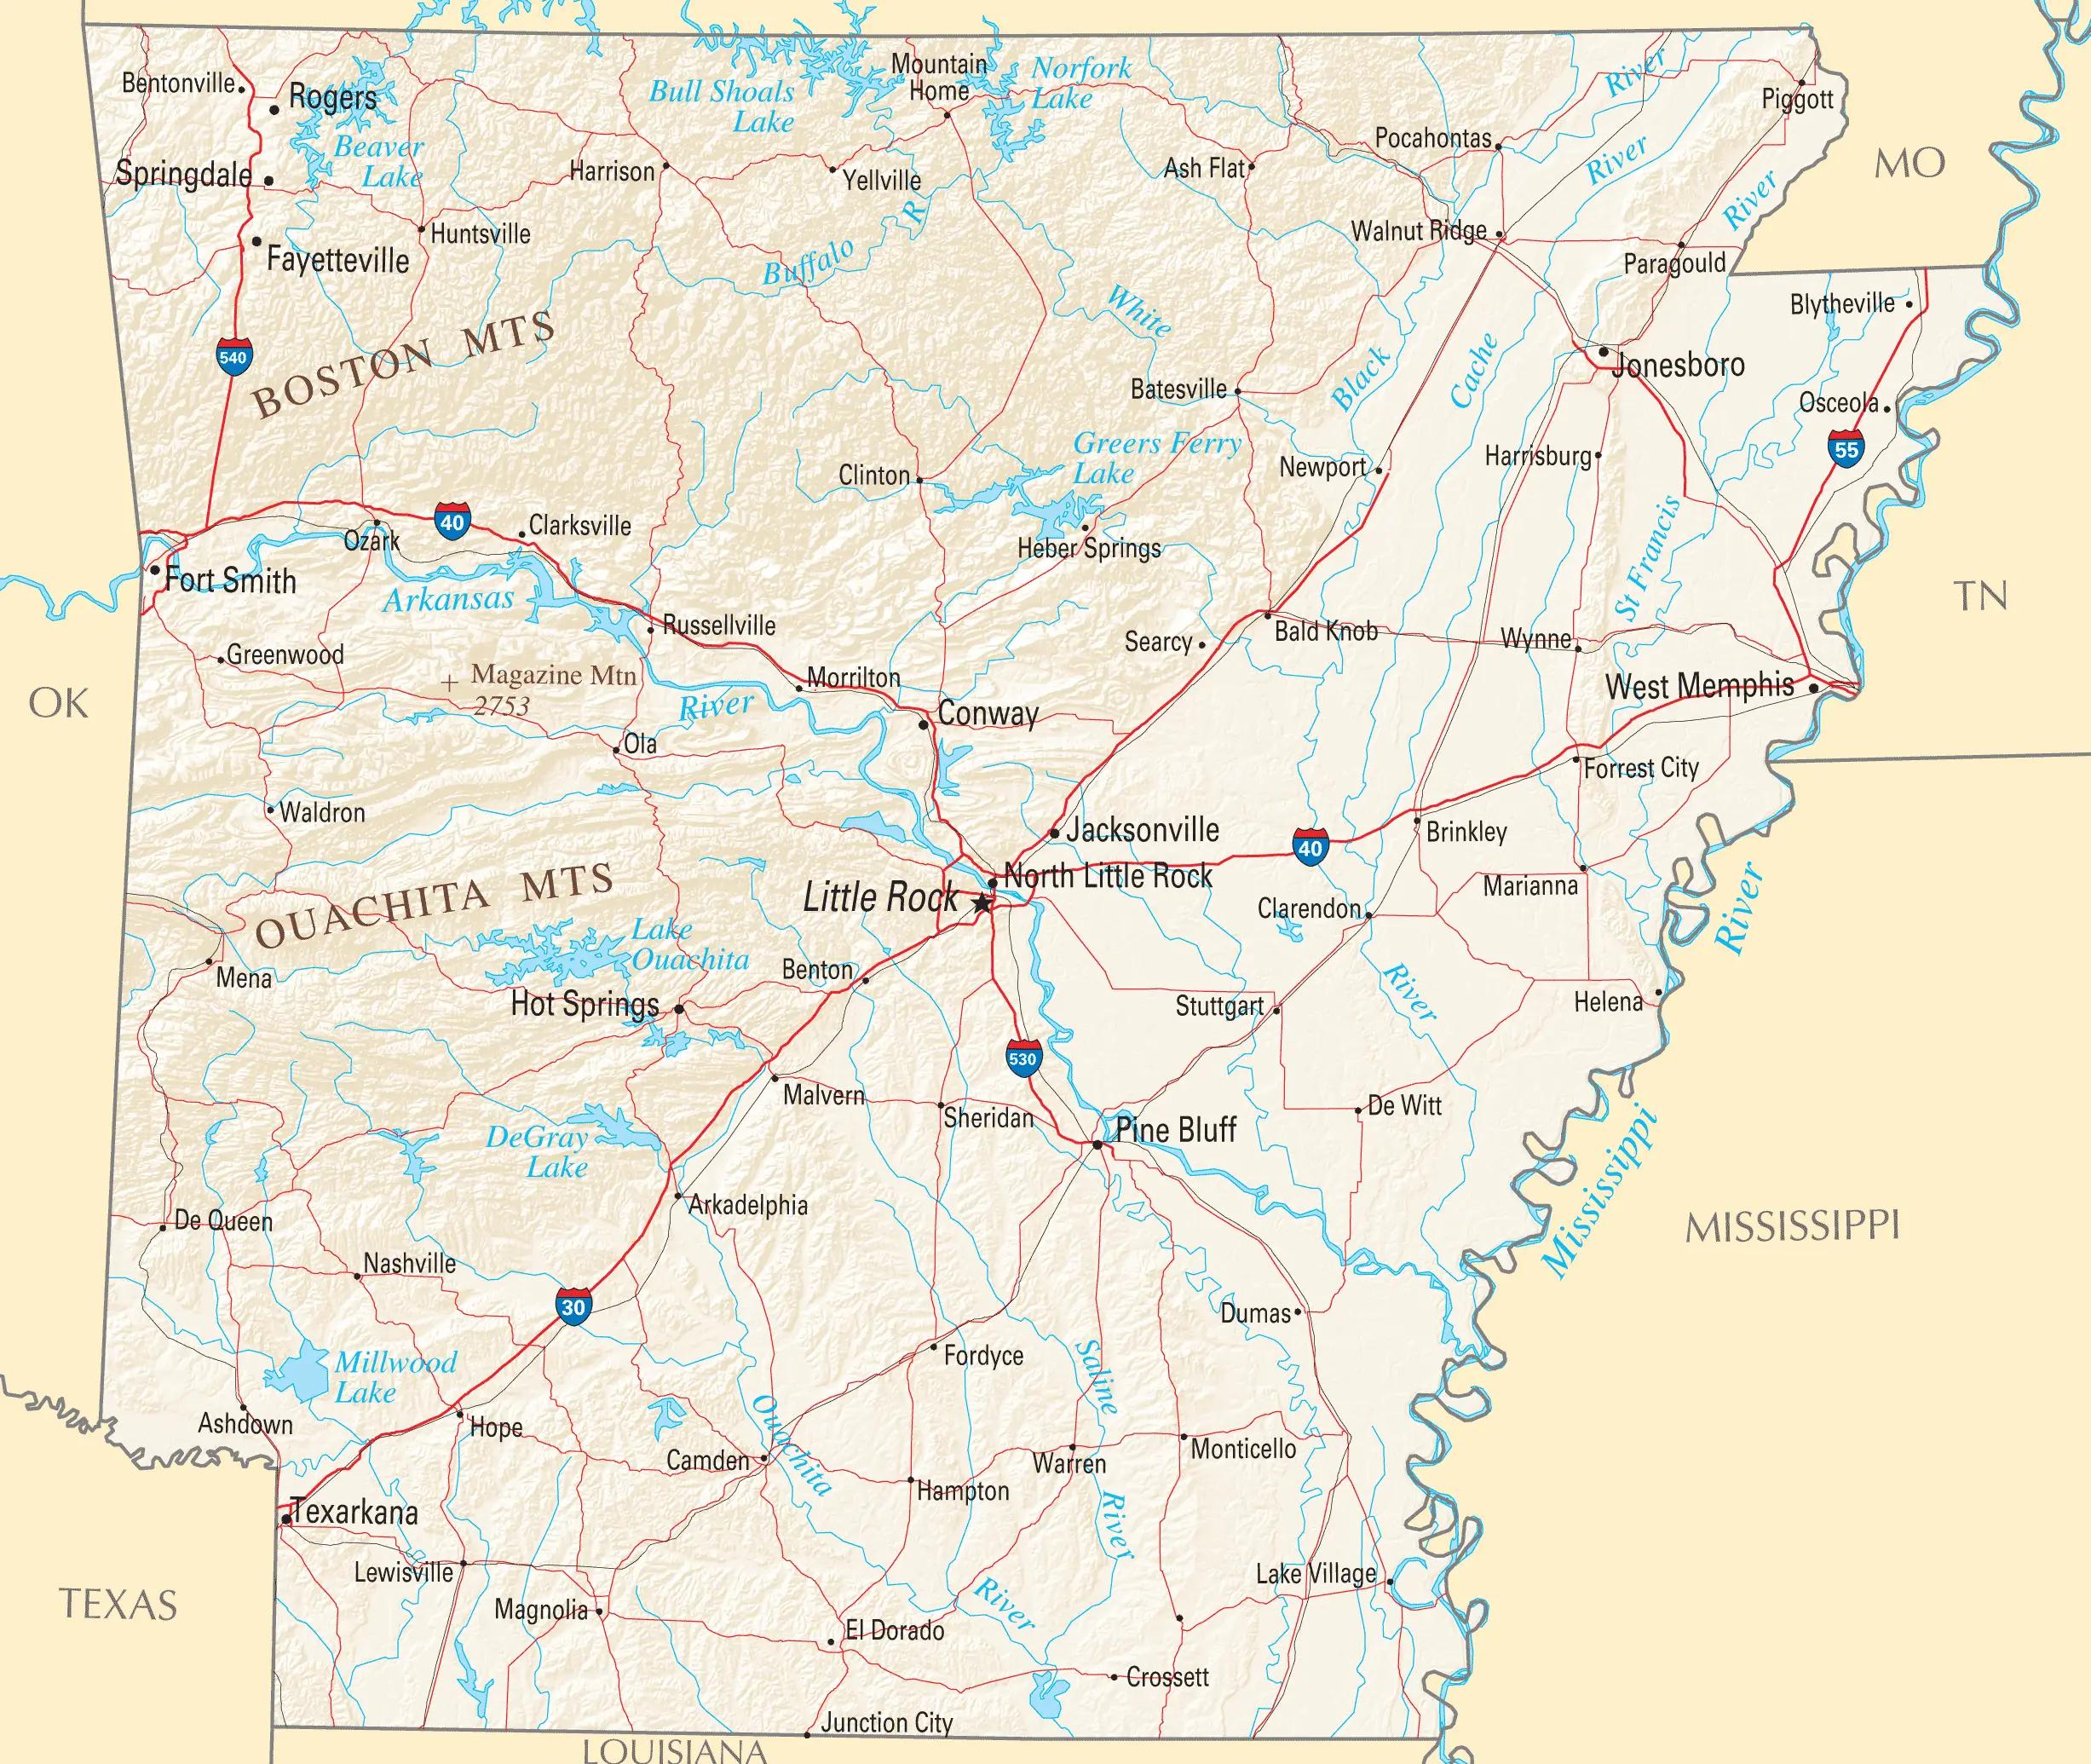 Arkansas Reference Map